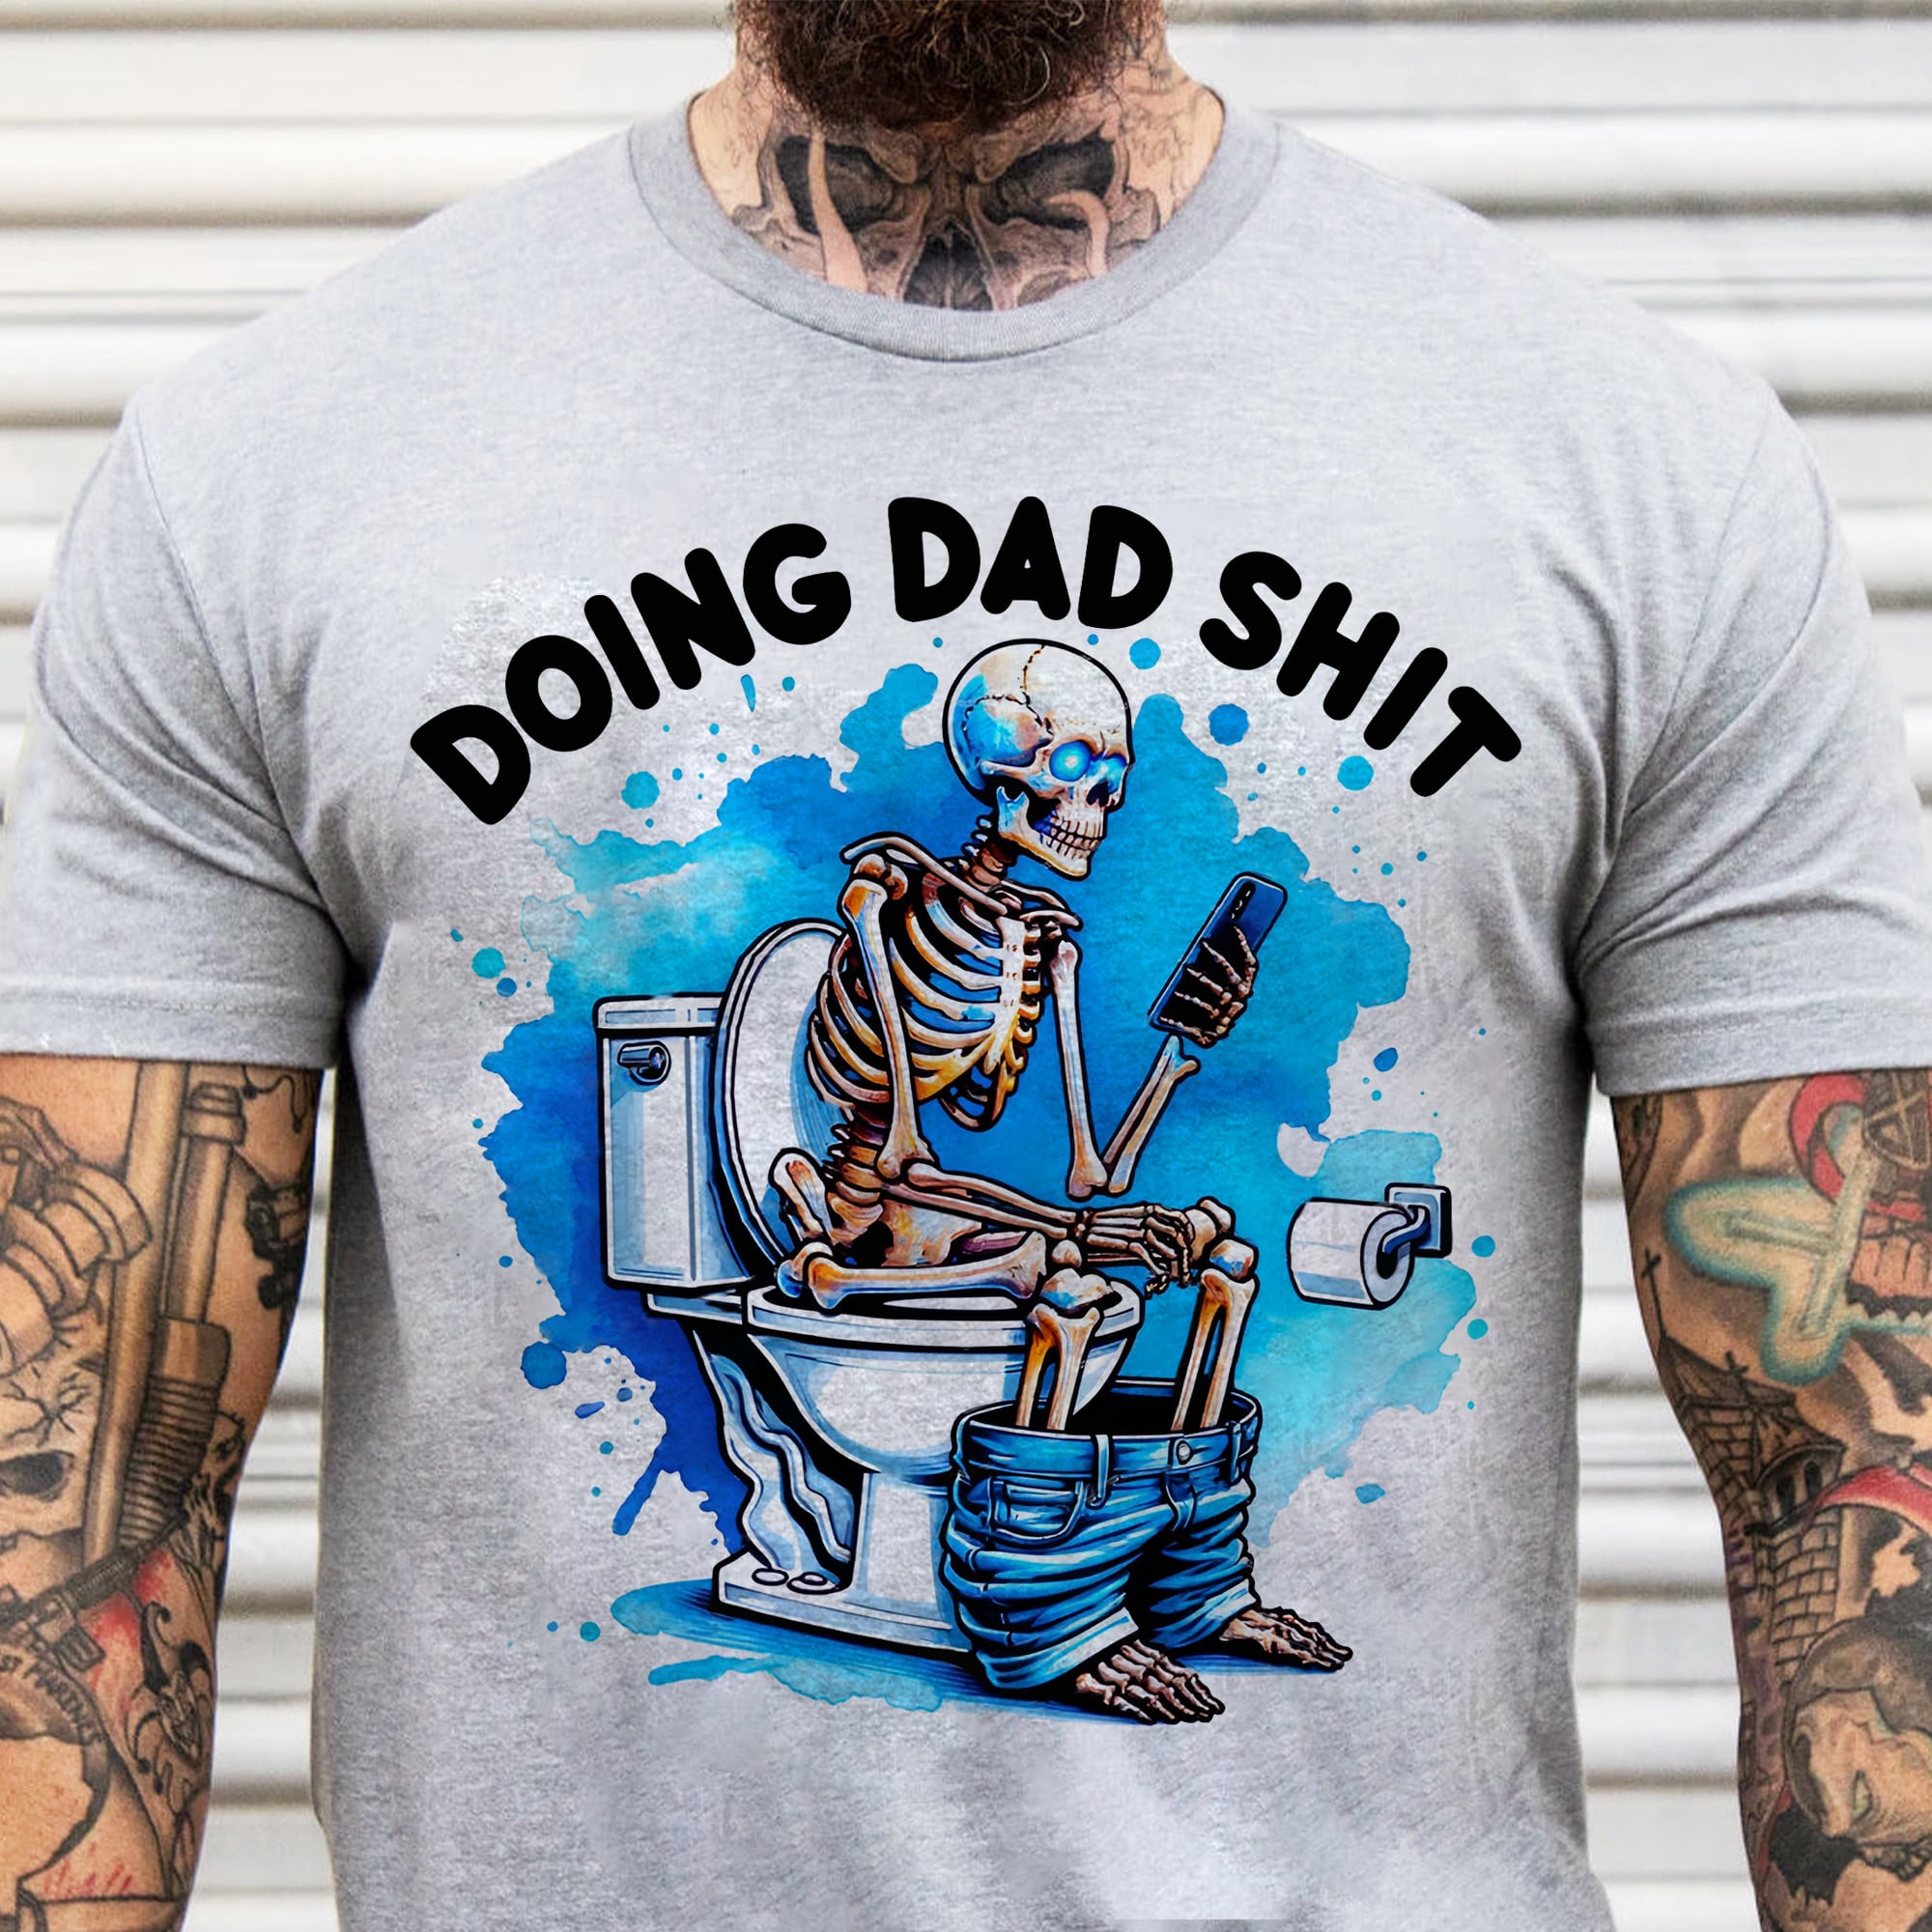 Skeleton Doing Dad Sh!t Shirt, Funny Meme Dad Shirt, Gift For Dad ...